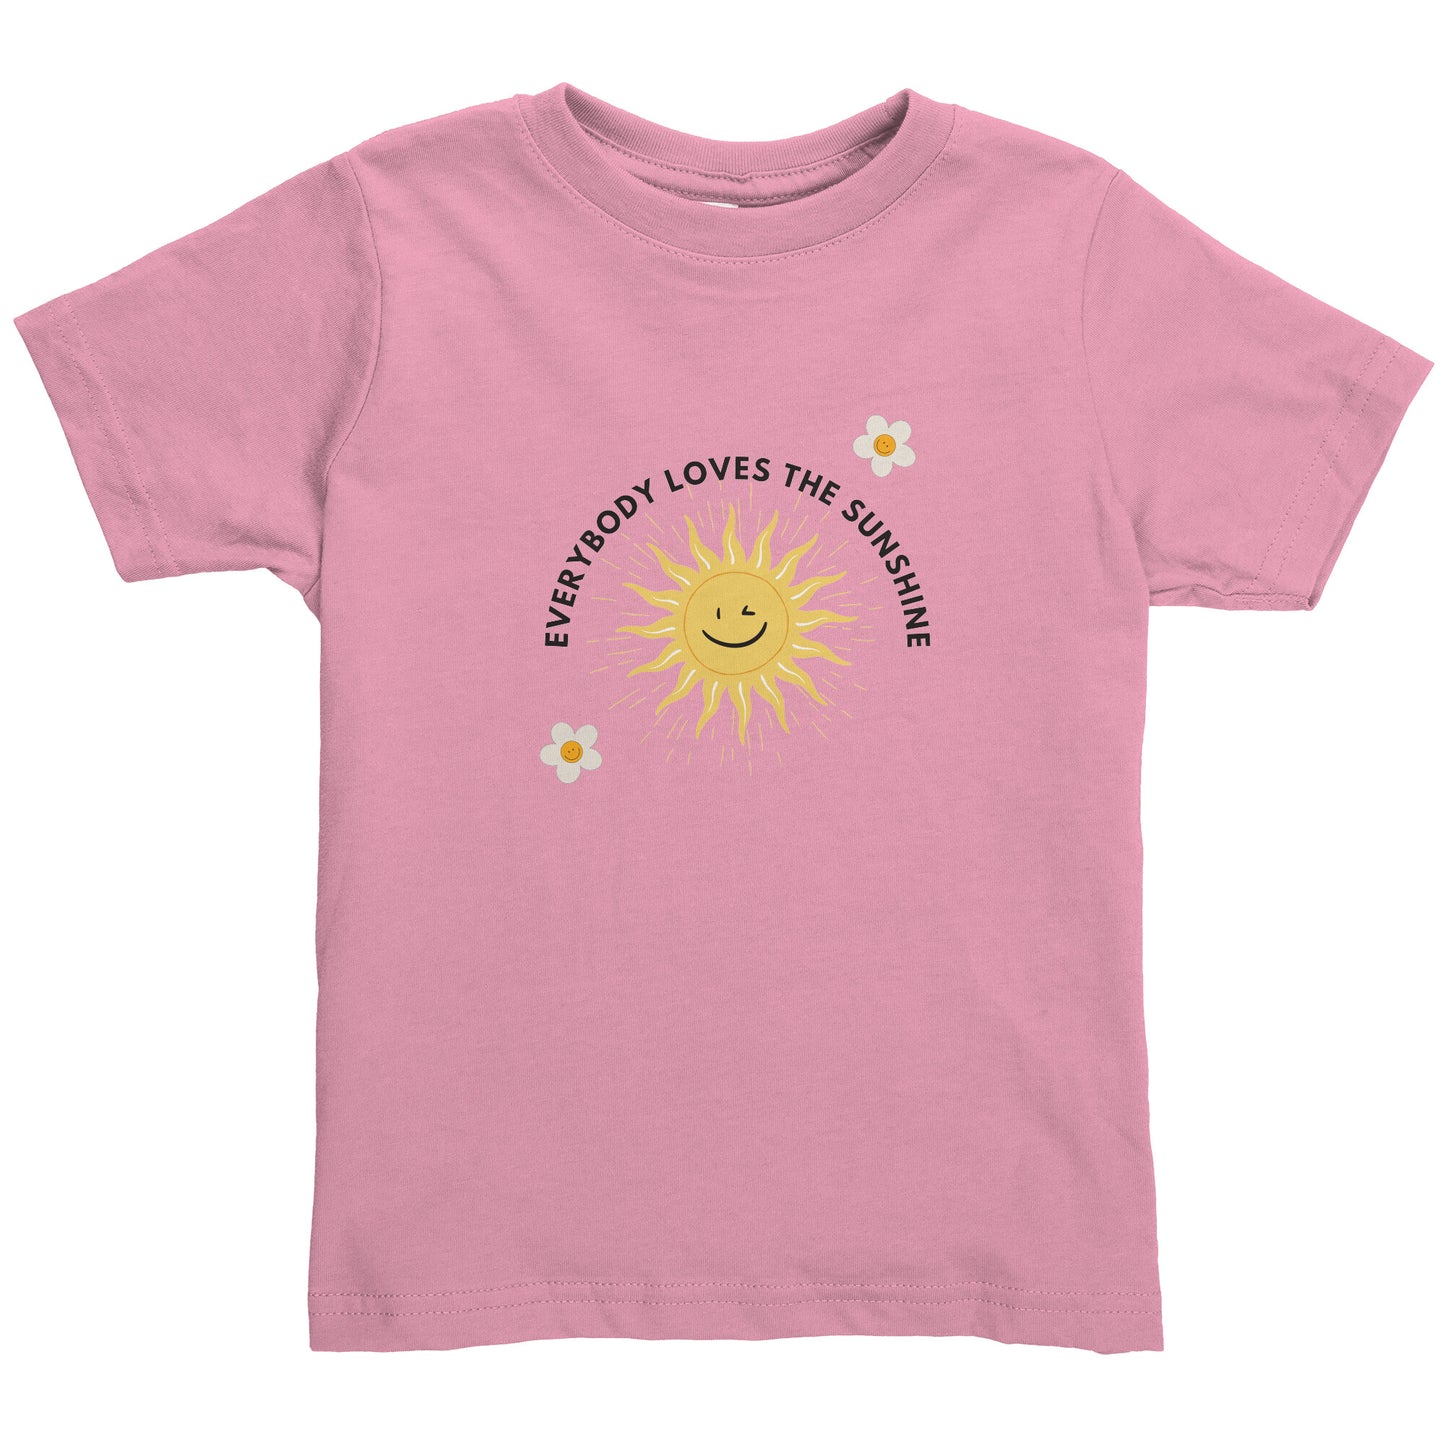 Loving sunshine Toddler T-shirt